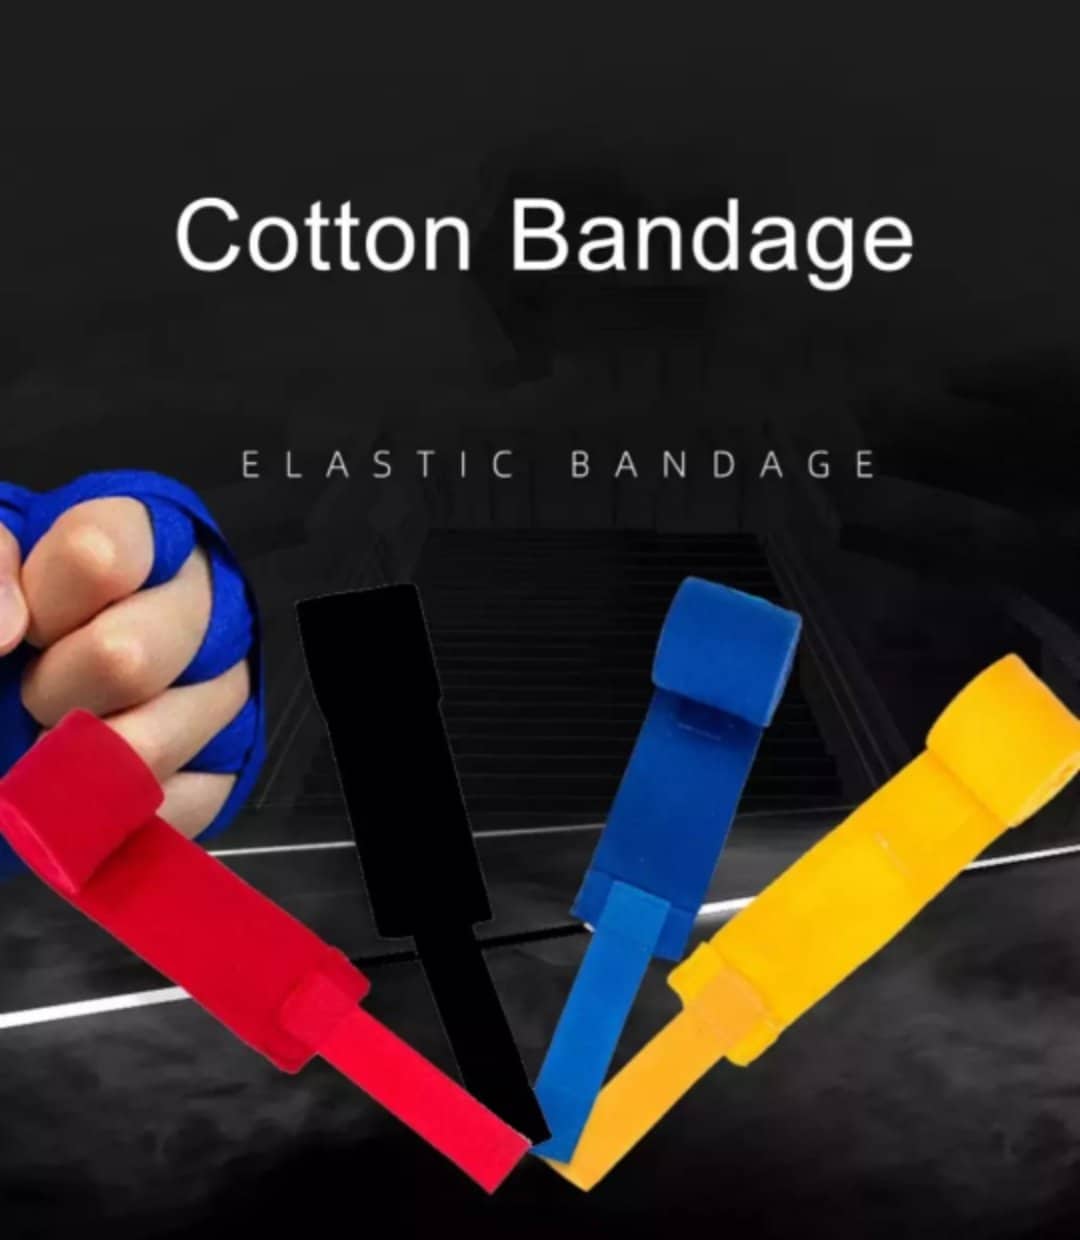 5m  Breathable Boxing Handwrap  Fabric Handguard Unisex Cotton Sports Strap Boxing Bandage Muay Thai Hand Wraps